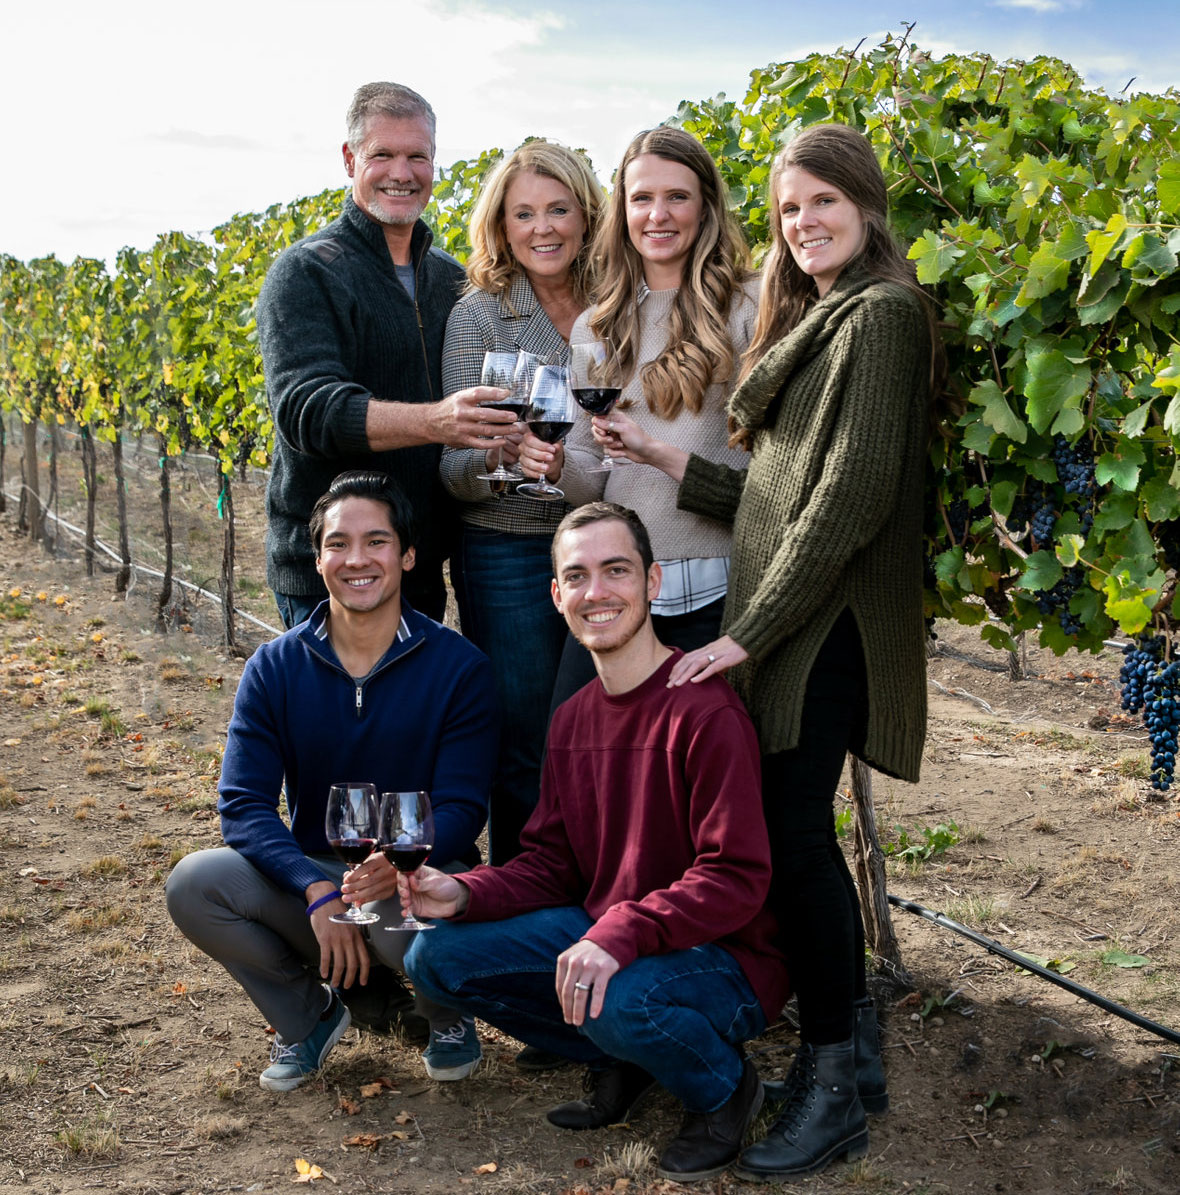 The Dufenhorst Family, Proprietors of Rocky Pond in a vineyard